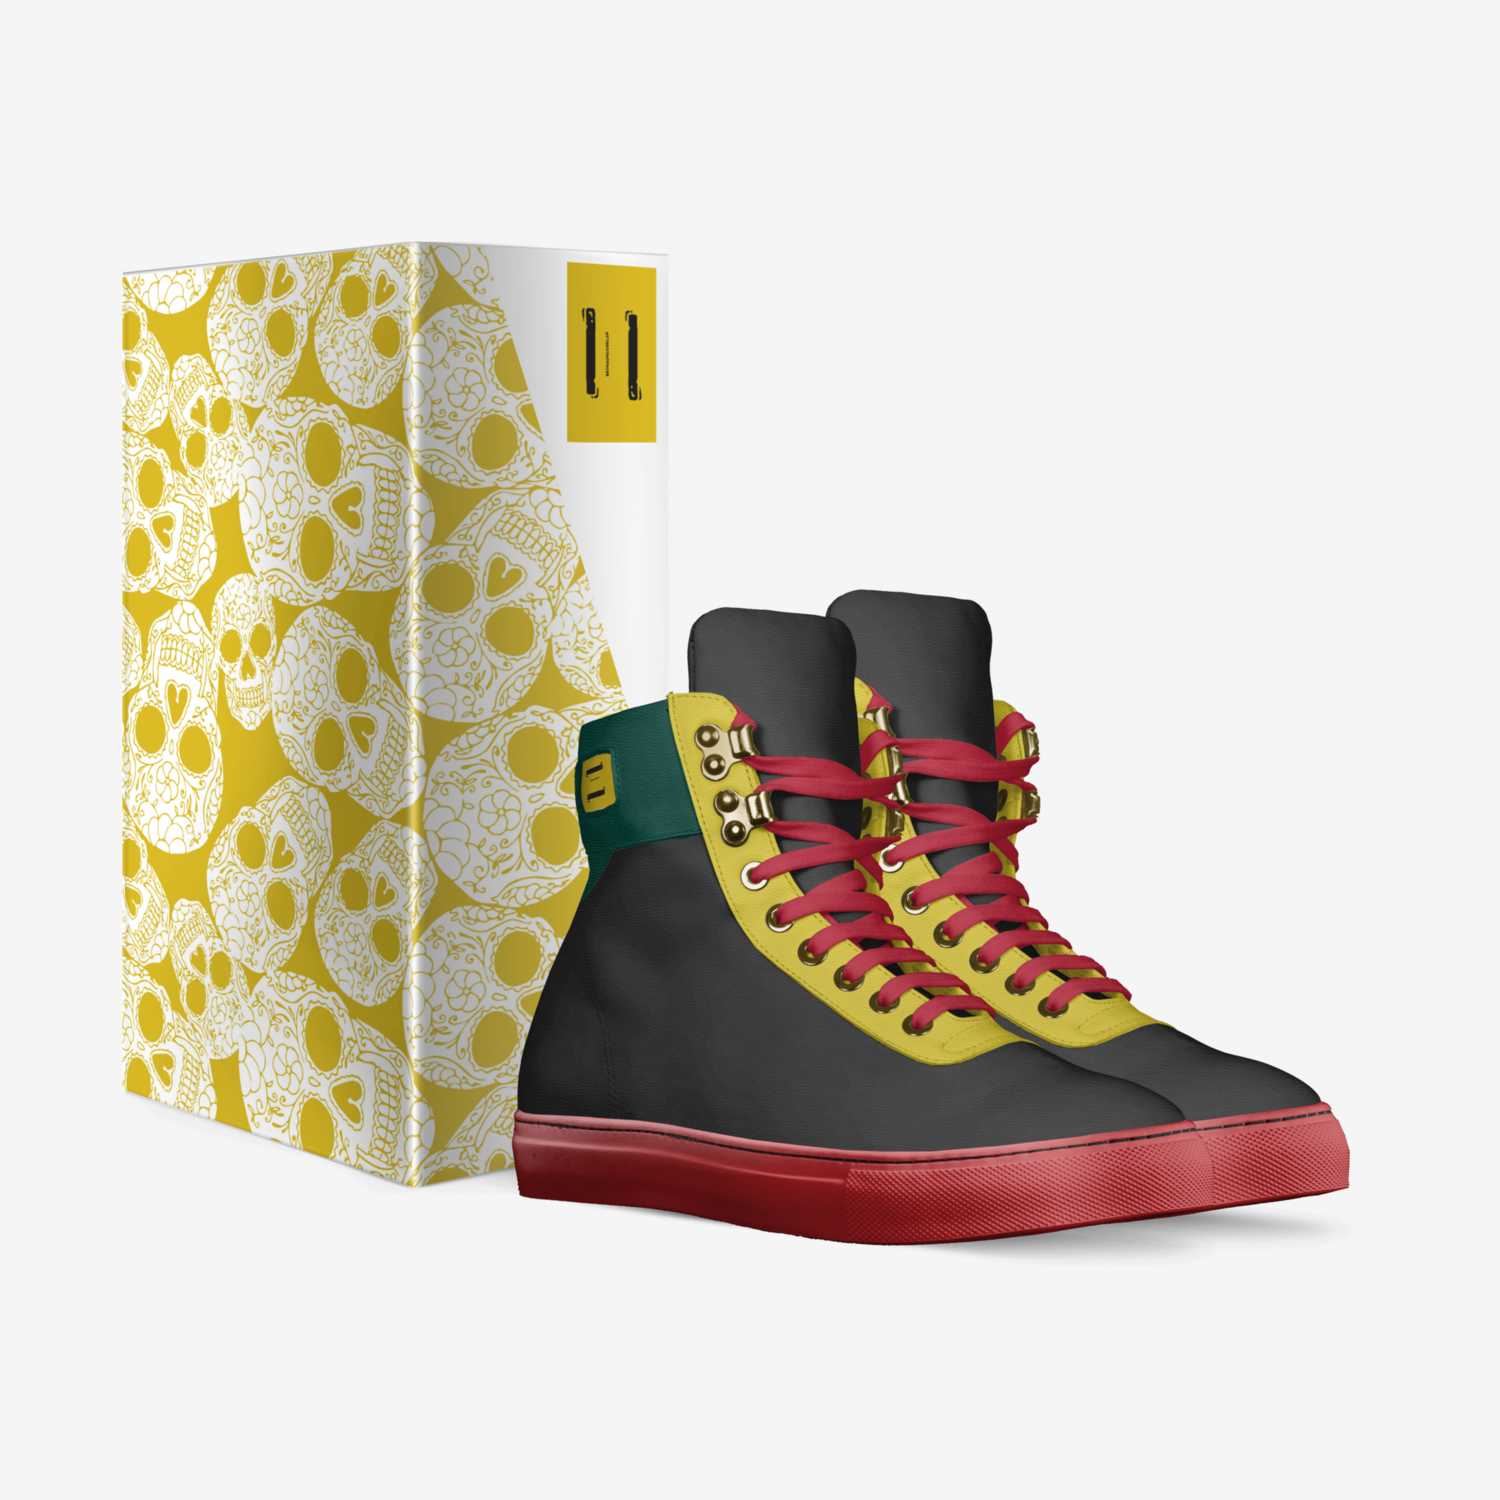 MandingoWear custom made in Italy shoes by Iyaba Ibo Mandingo | Box view